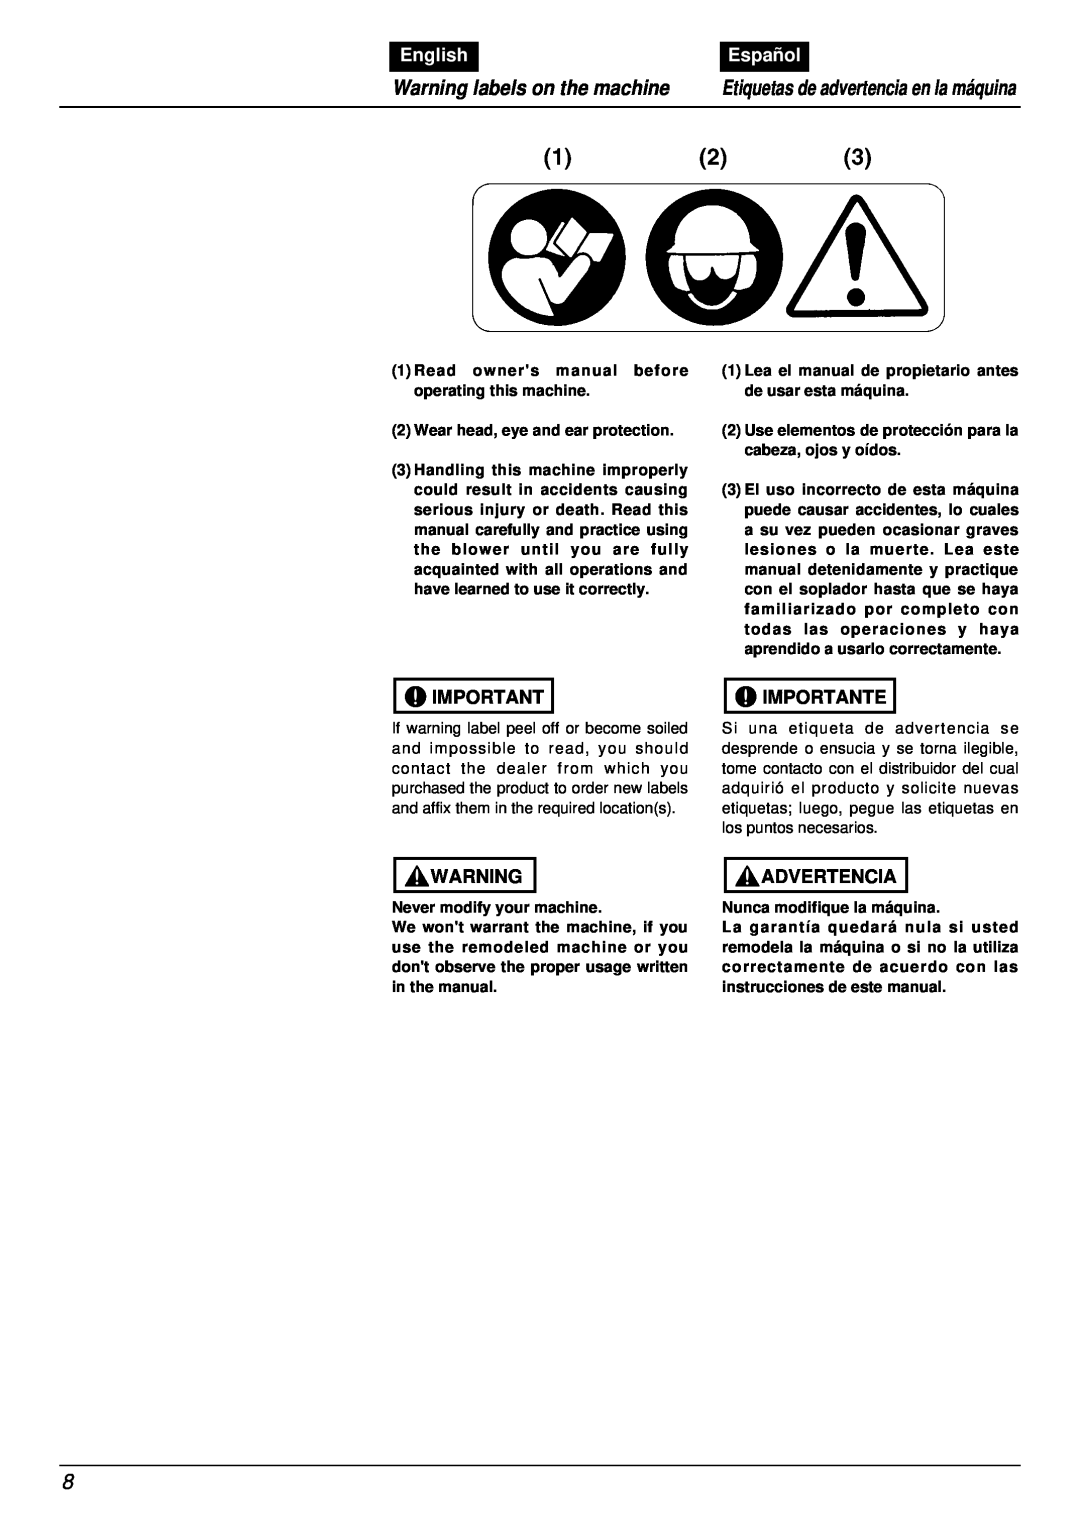 RedMax EB7001RH manual Warning labels on the machine, English, Español, Importante, Advertencia 